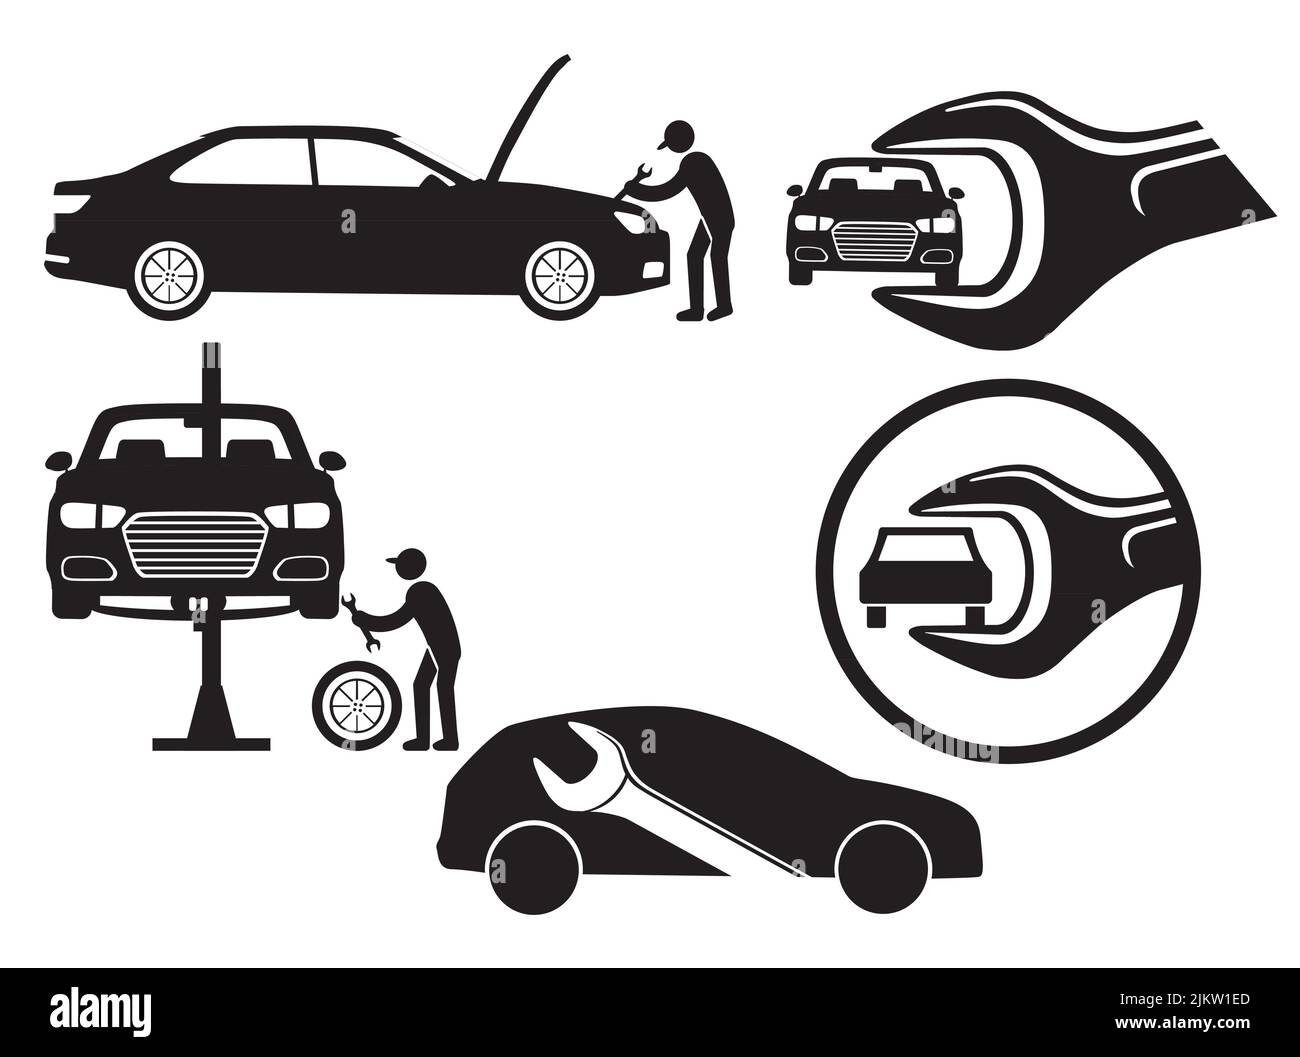 Auto repair with auto mechanic, illustration Stock Vector